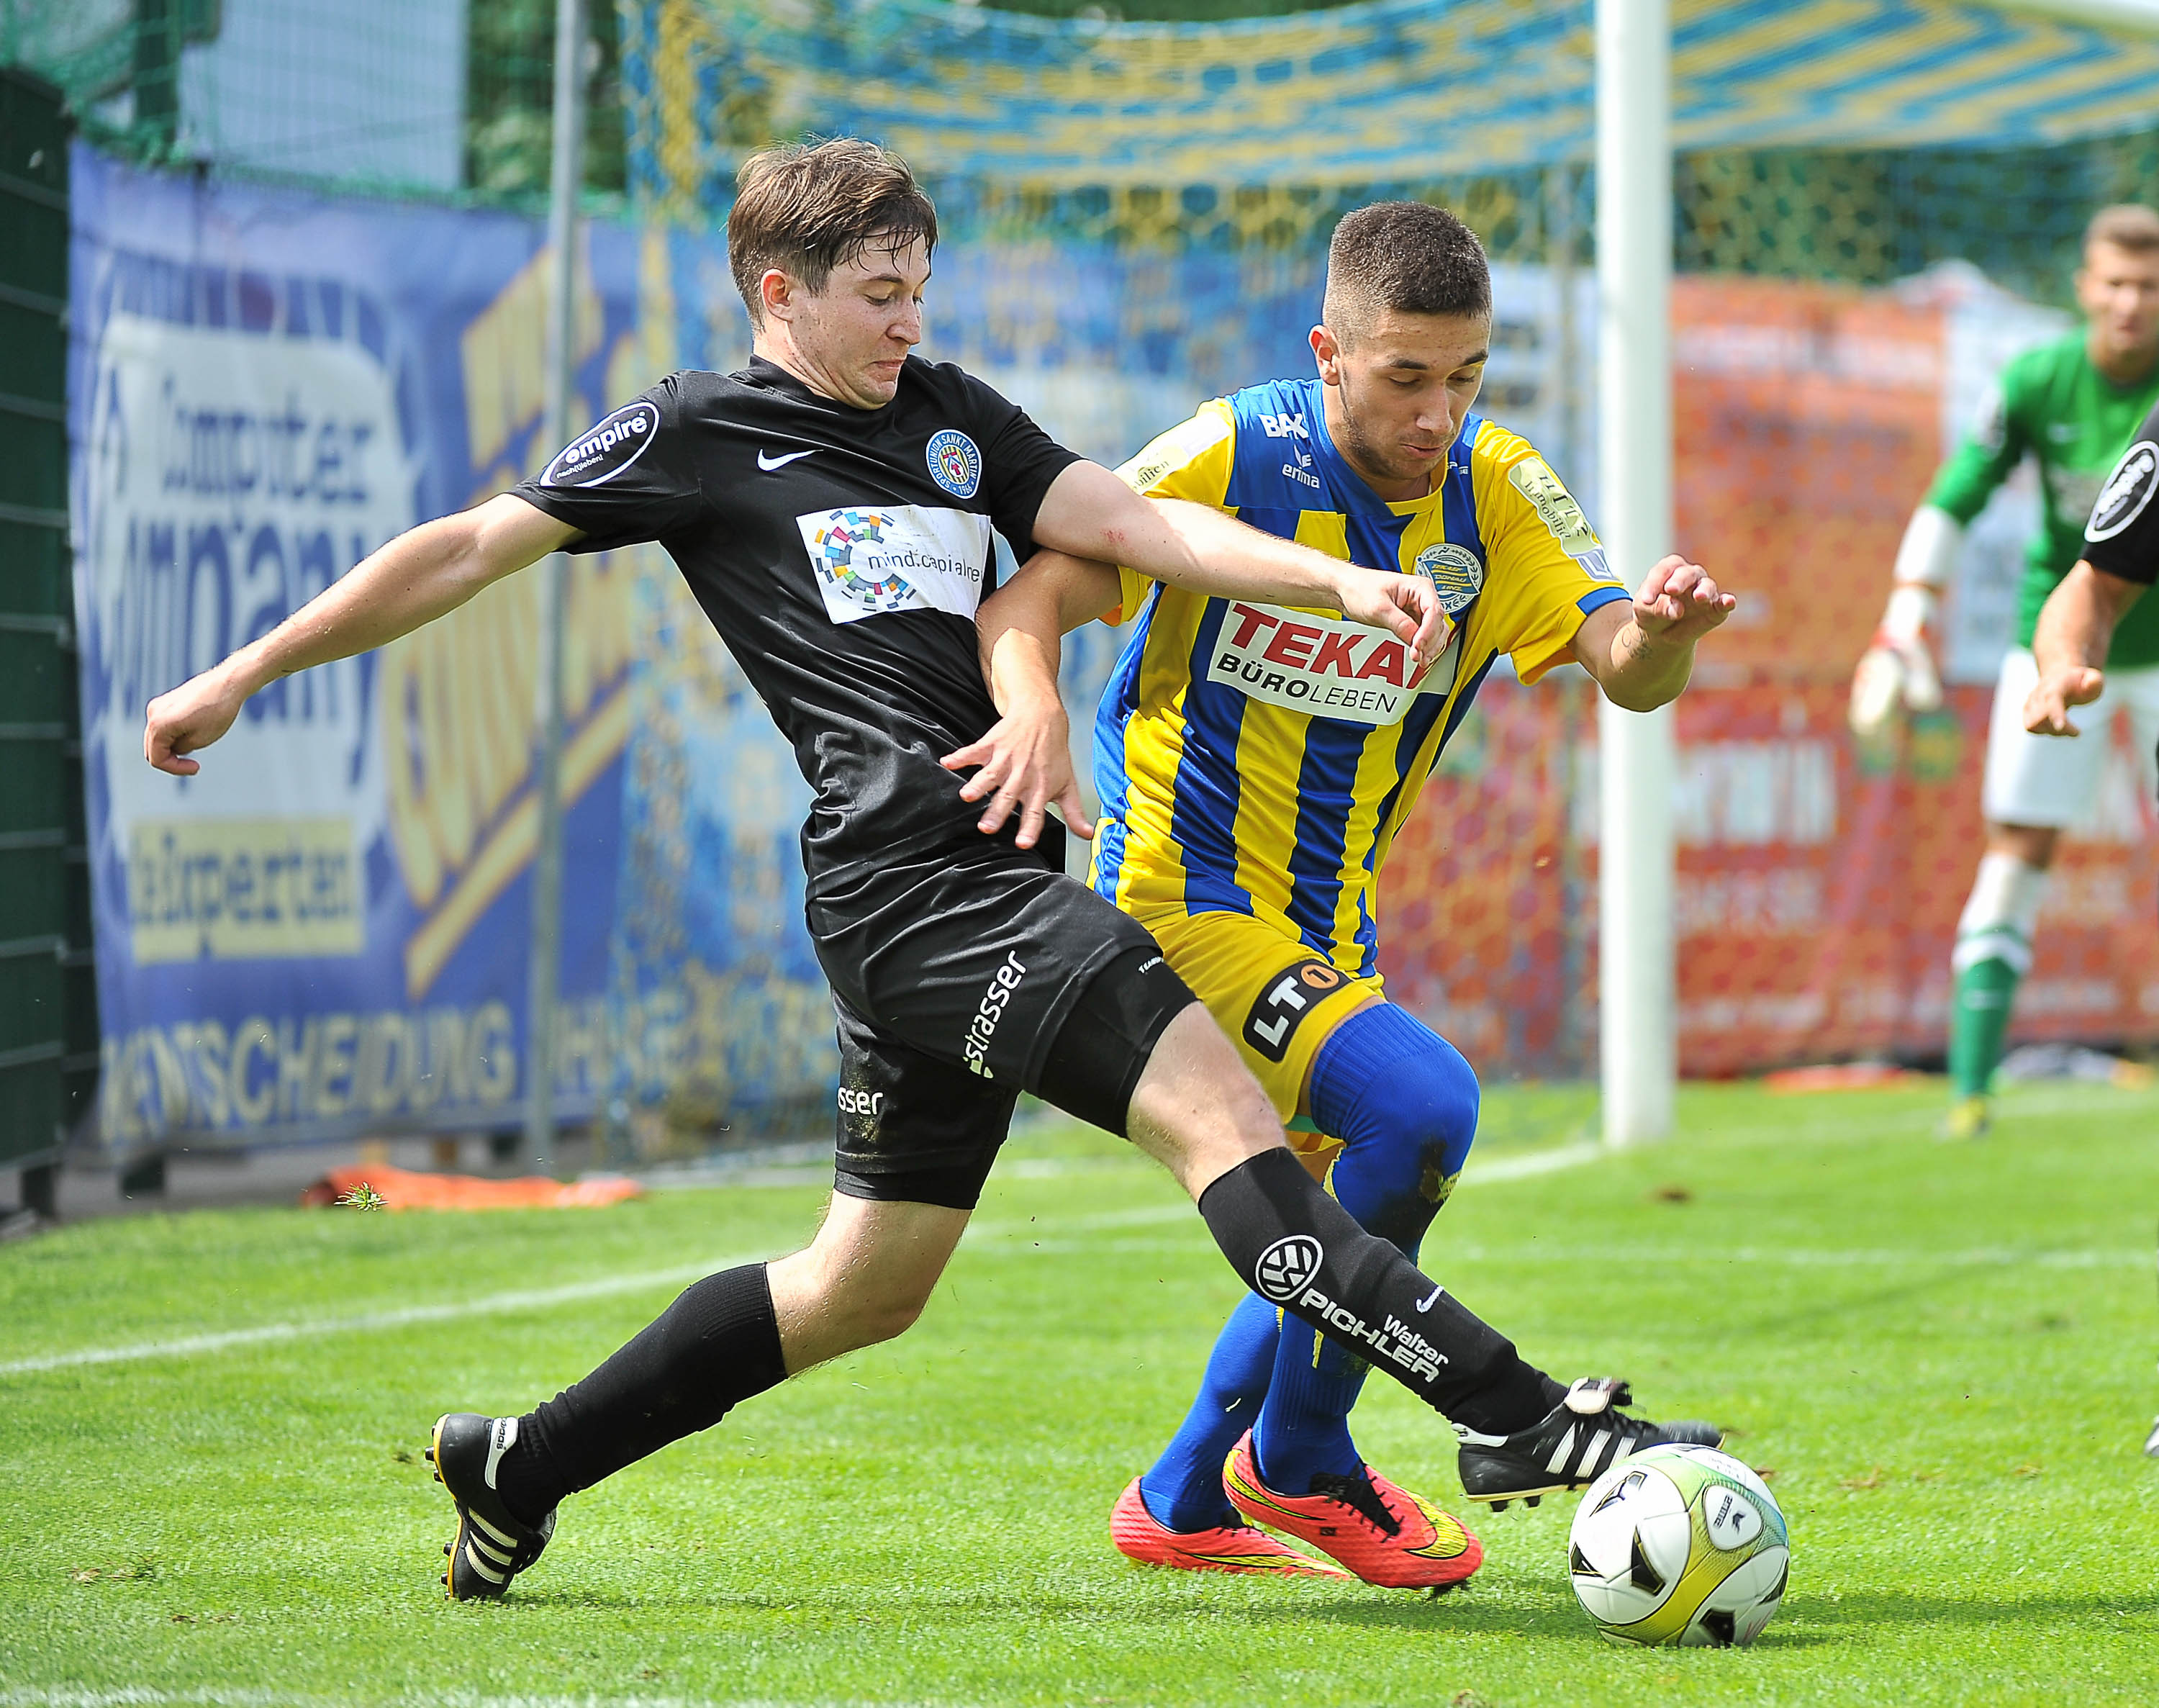 Fussball Askoe Donau Linz vs SU St.Martin i. Mkr. 15.08.2014-2-13